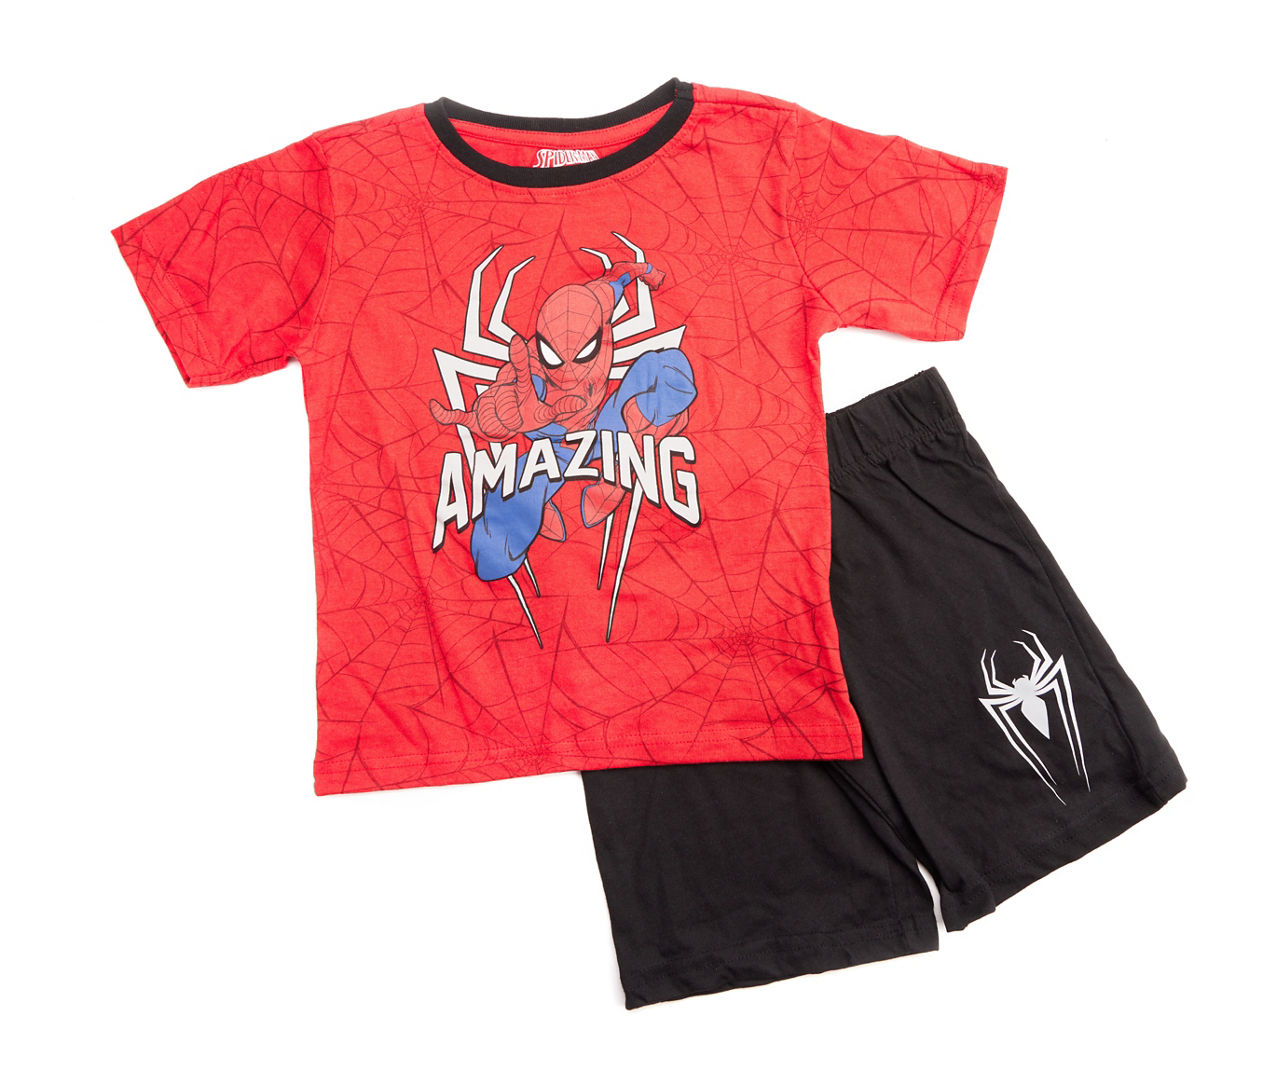 Toddler Size 4T "Amazing" Red Spidey Tee & Black Shorts Set